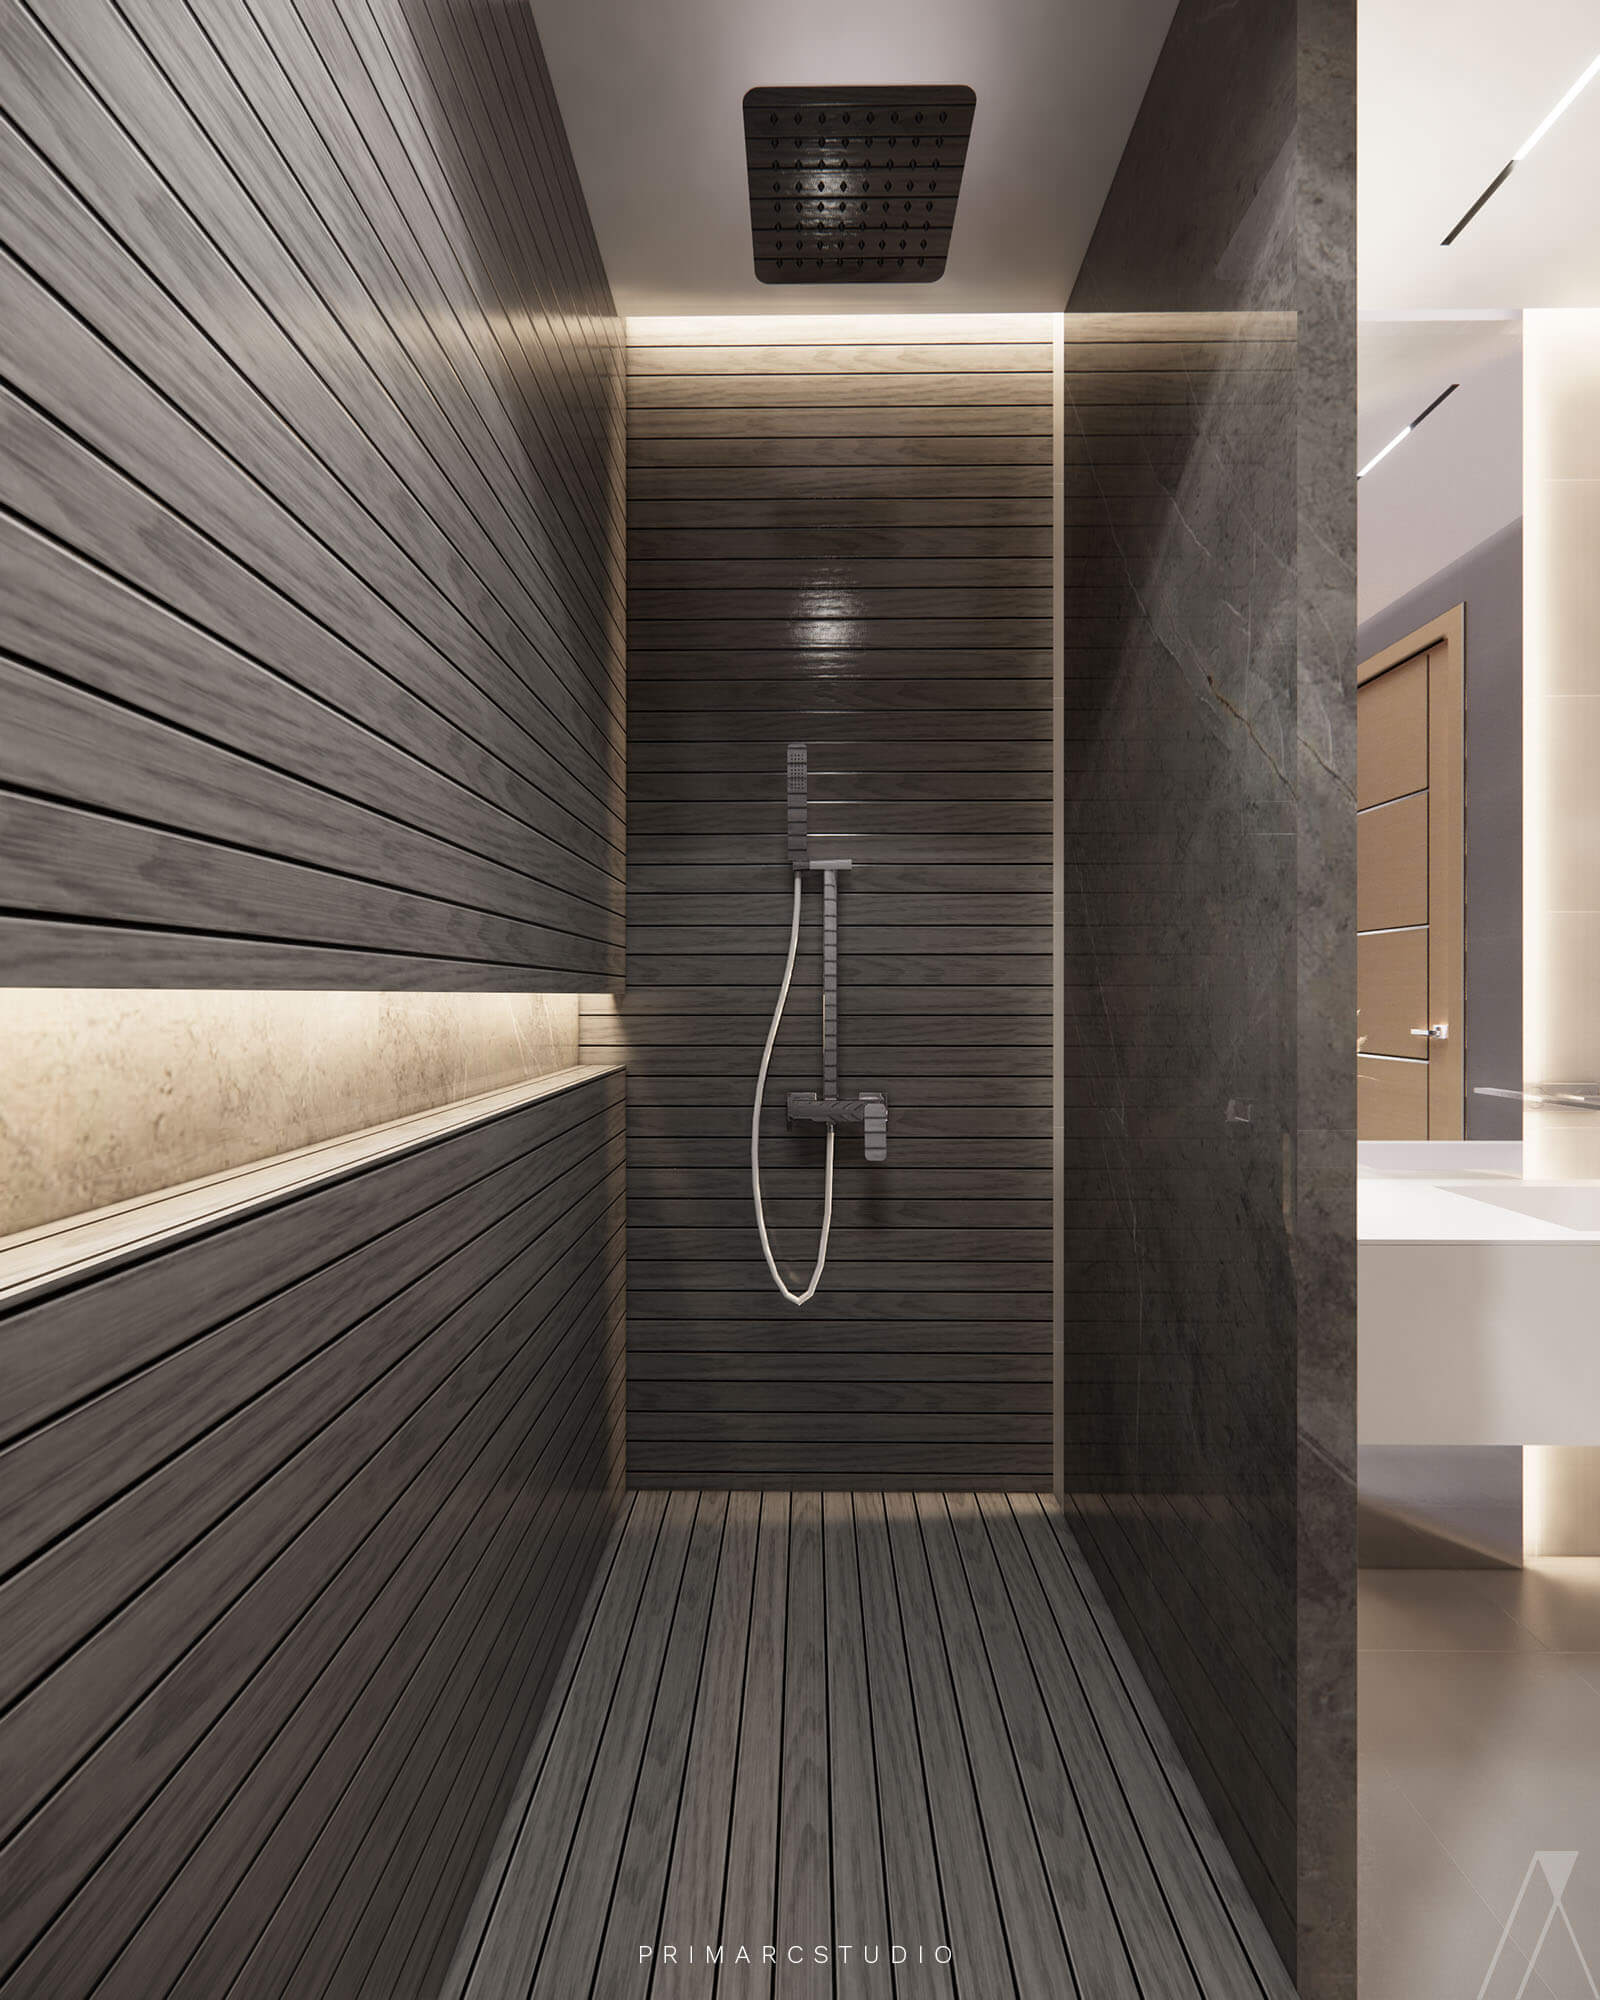 Shower area design in the washroom